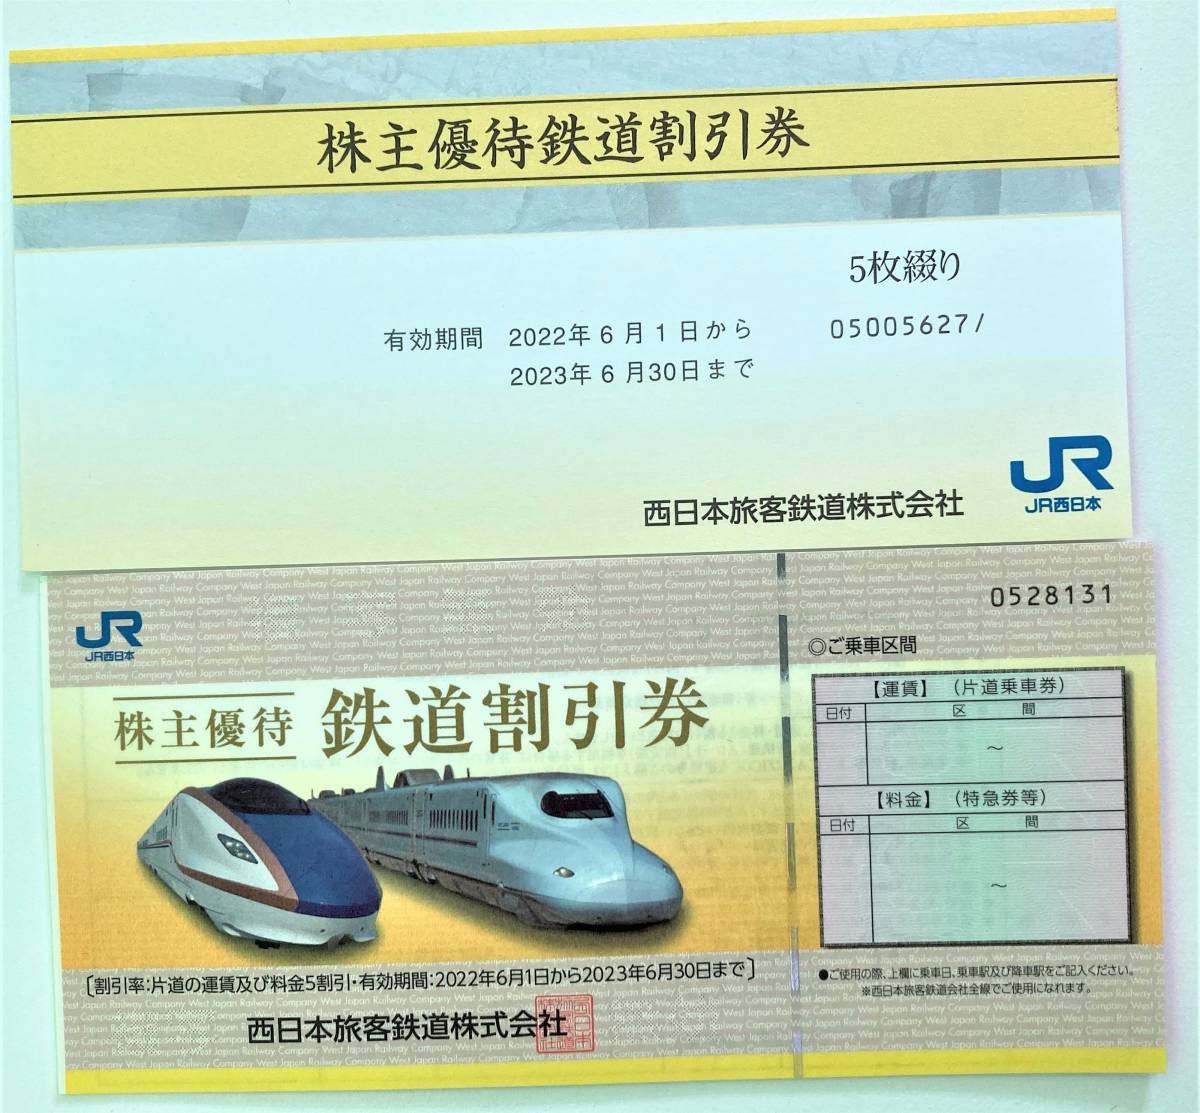 JR西日本株主優待鉄道割引券 - www.nslibrary.gov.my